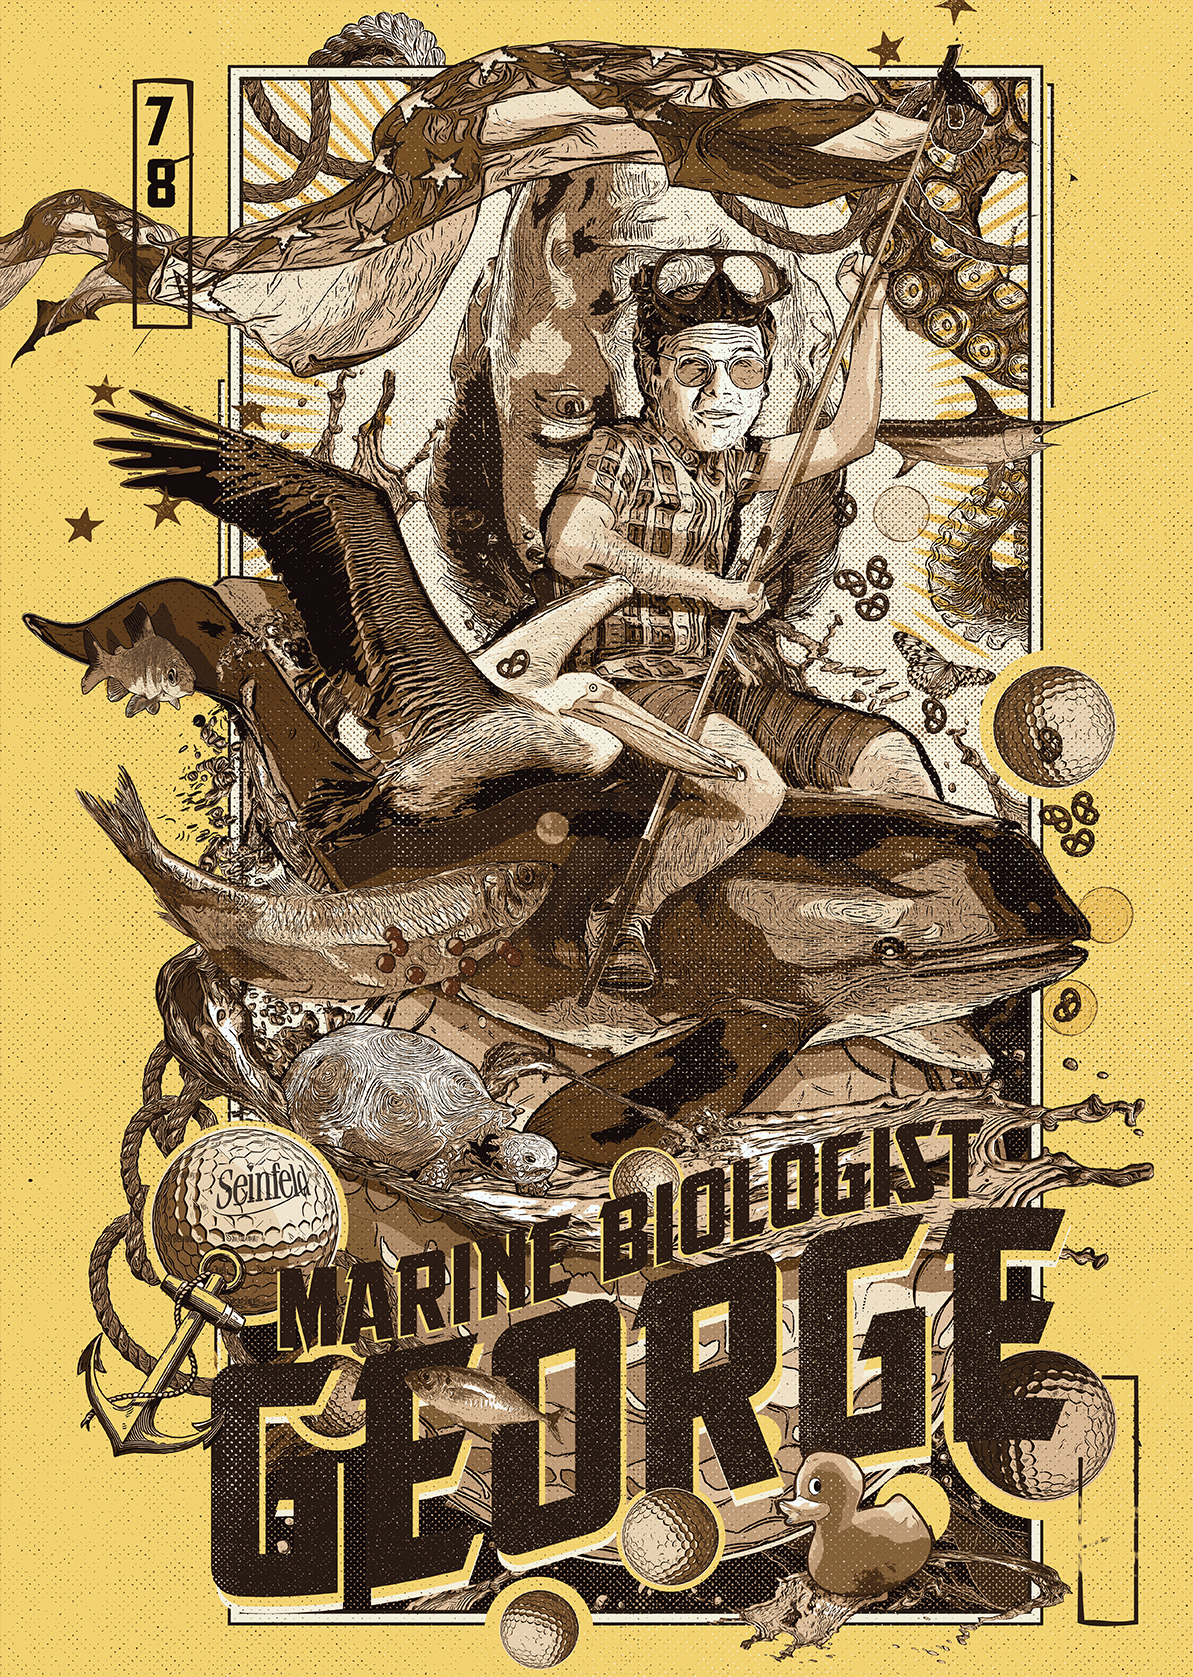 Marine Biologist George / Sienfeld